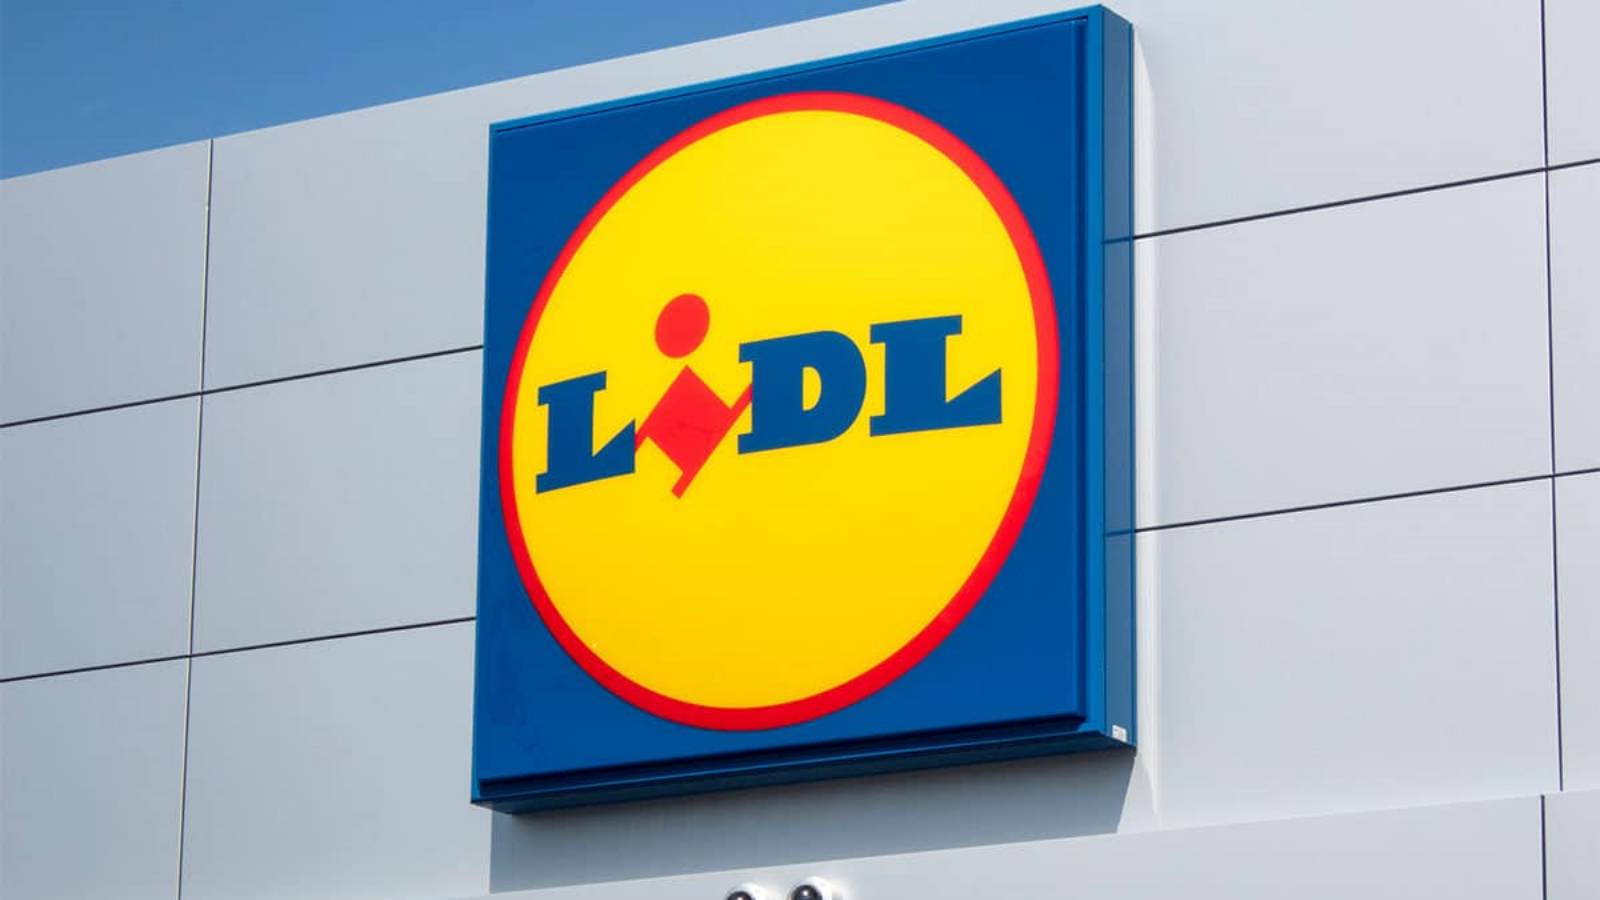 LIDL Romania diversification